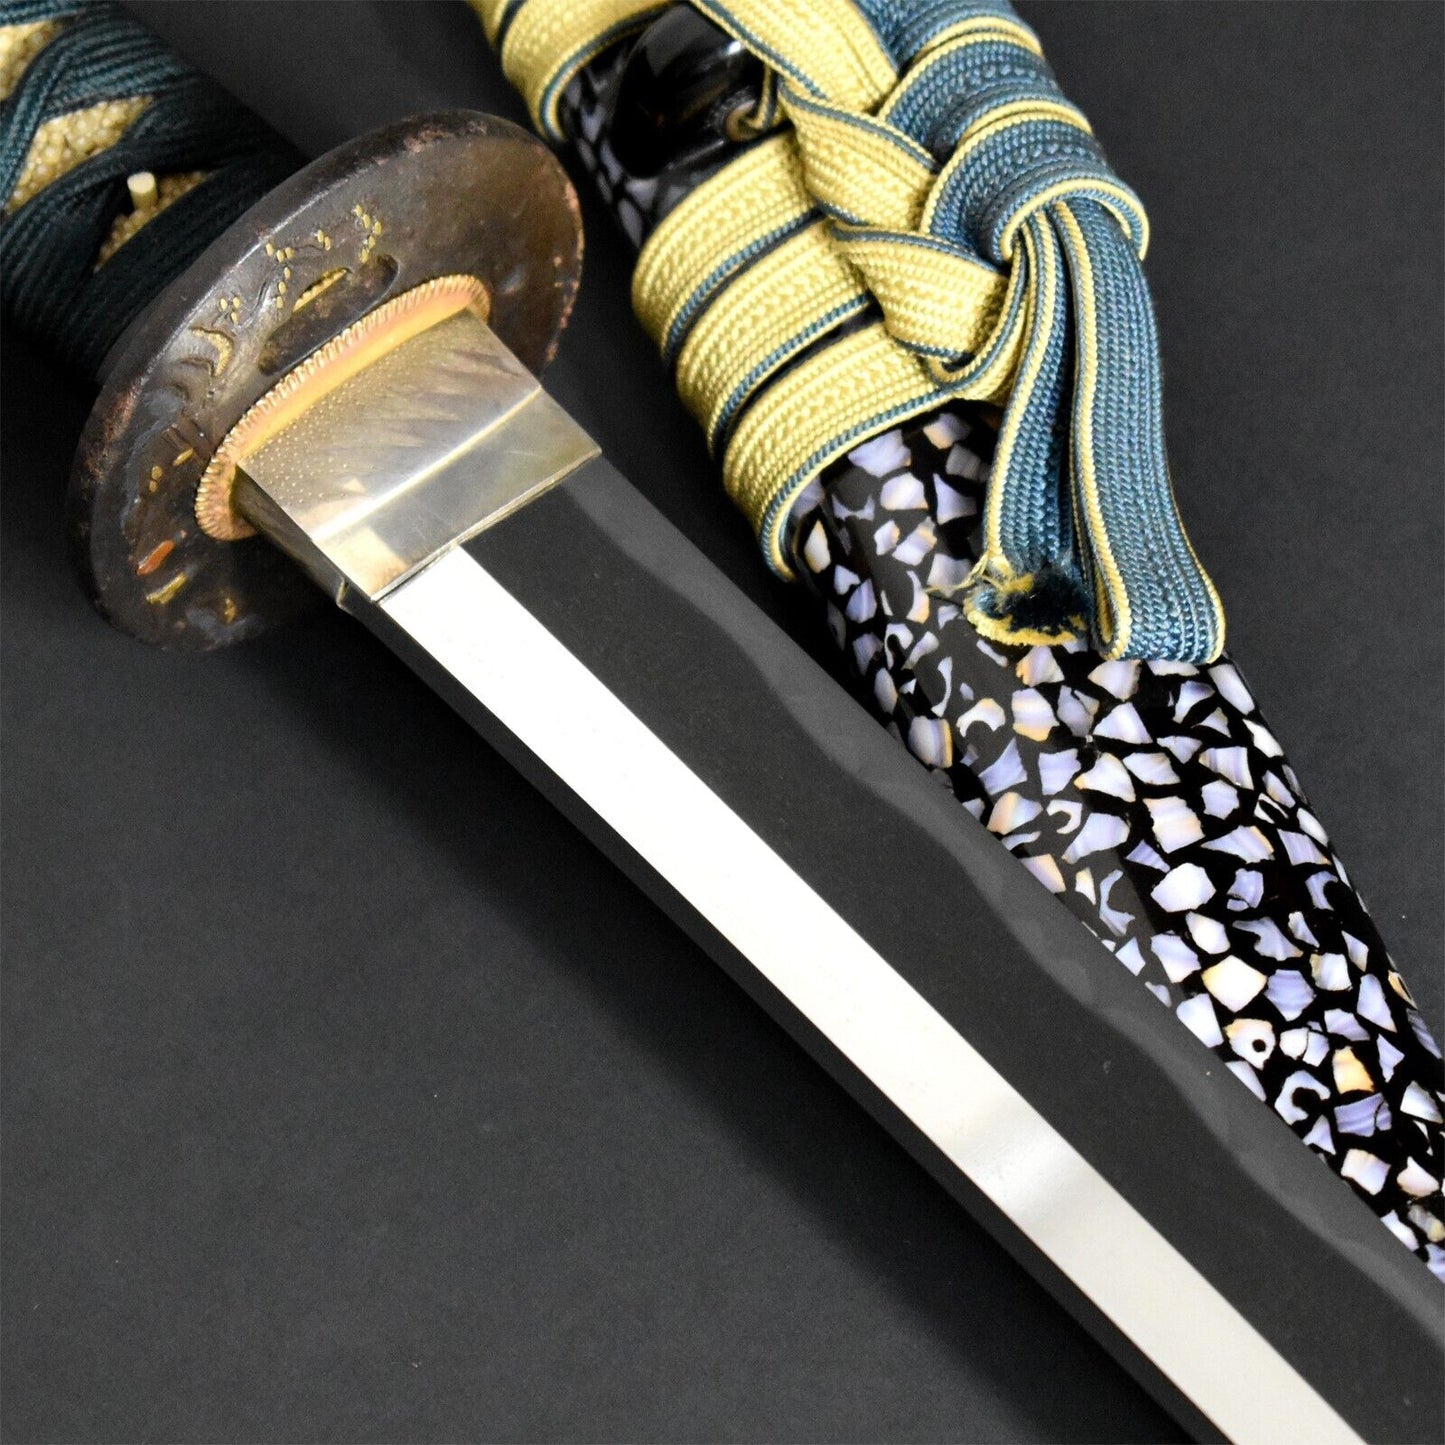 Authentic Antique Original Japanese Katana Sword Wakizashi Kanenobu Signed Collectible Samurai Blade.